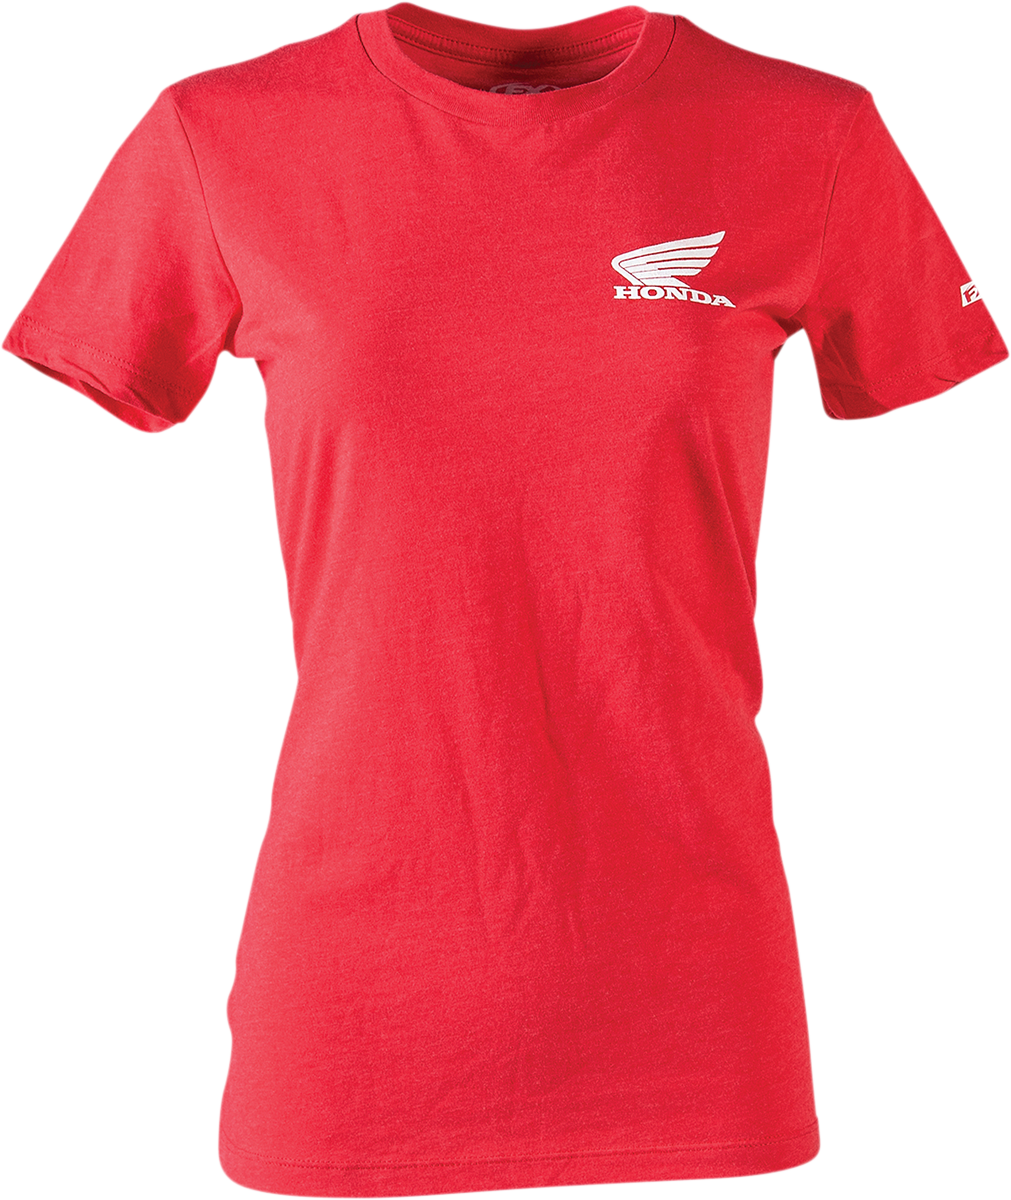 FACTORY EFFEX Women's Honda Icon T-Shirt - Red - Medium 24-87312